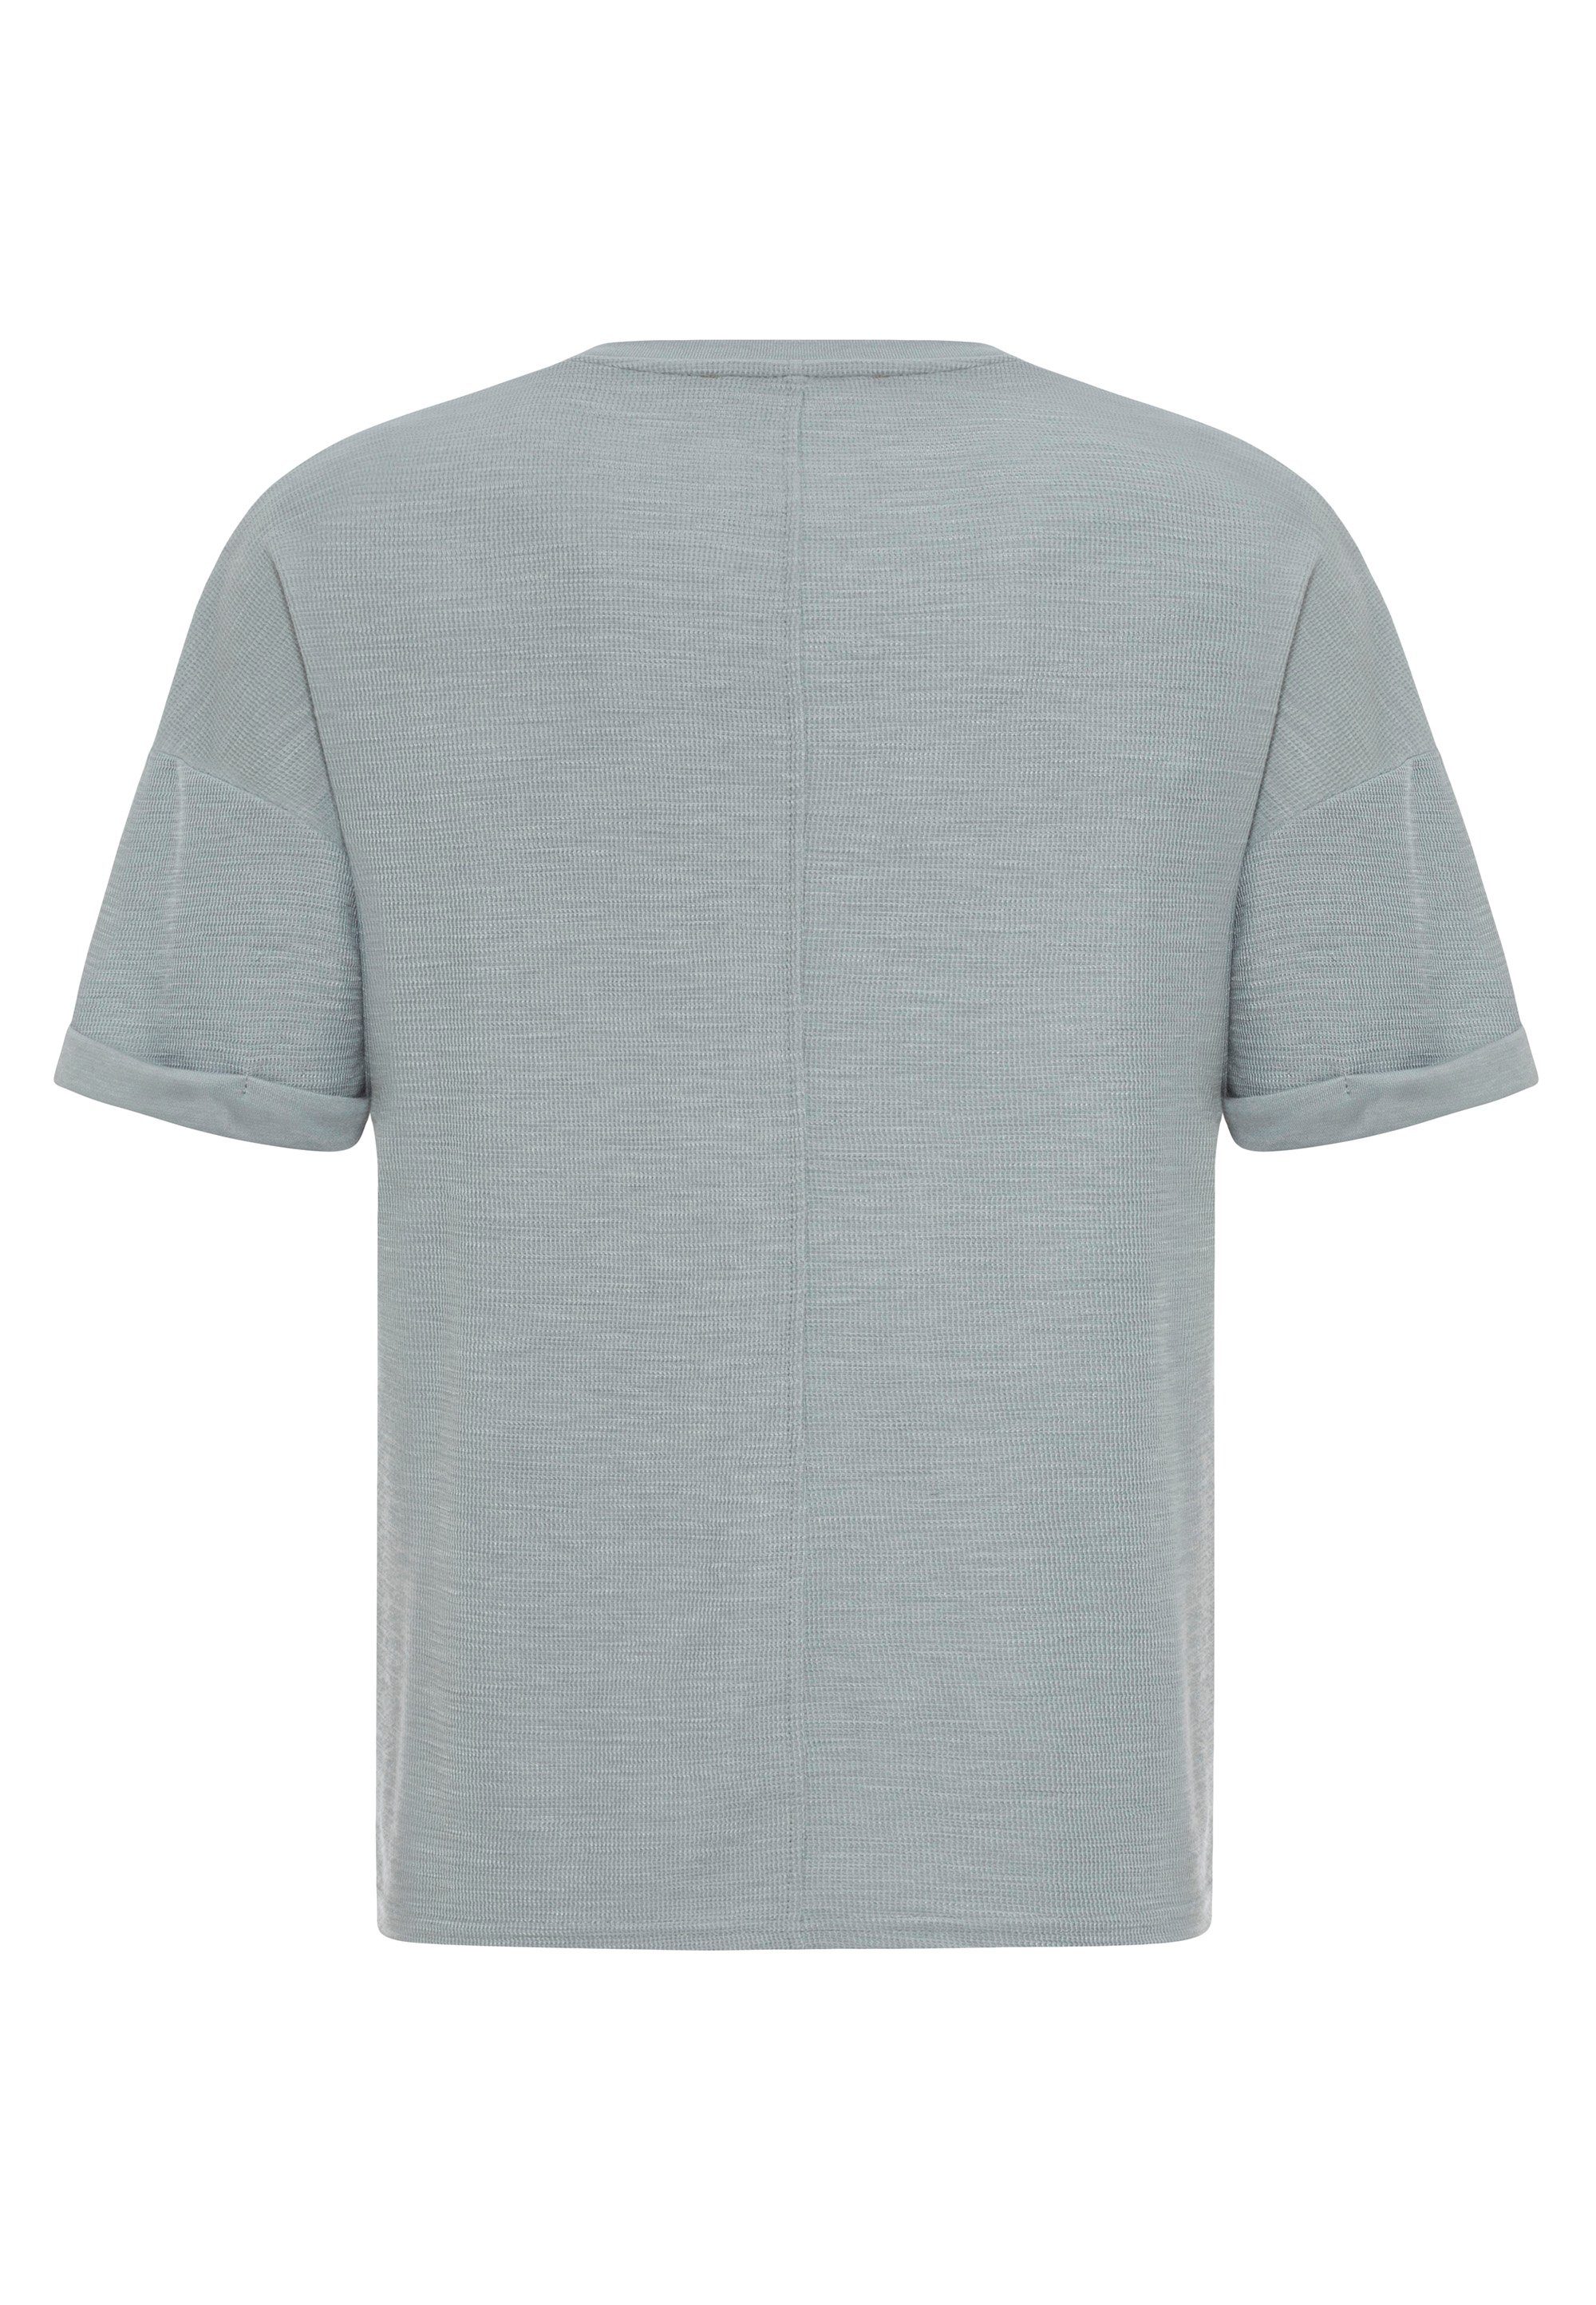 Krempelärmeln RedBridge T-Shirt Hereford mit grau